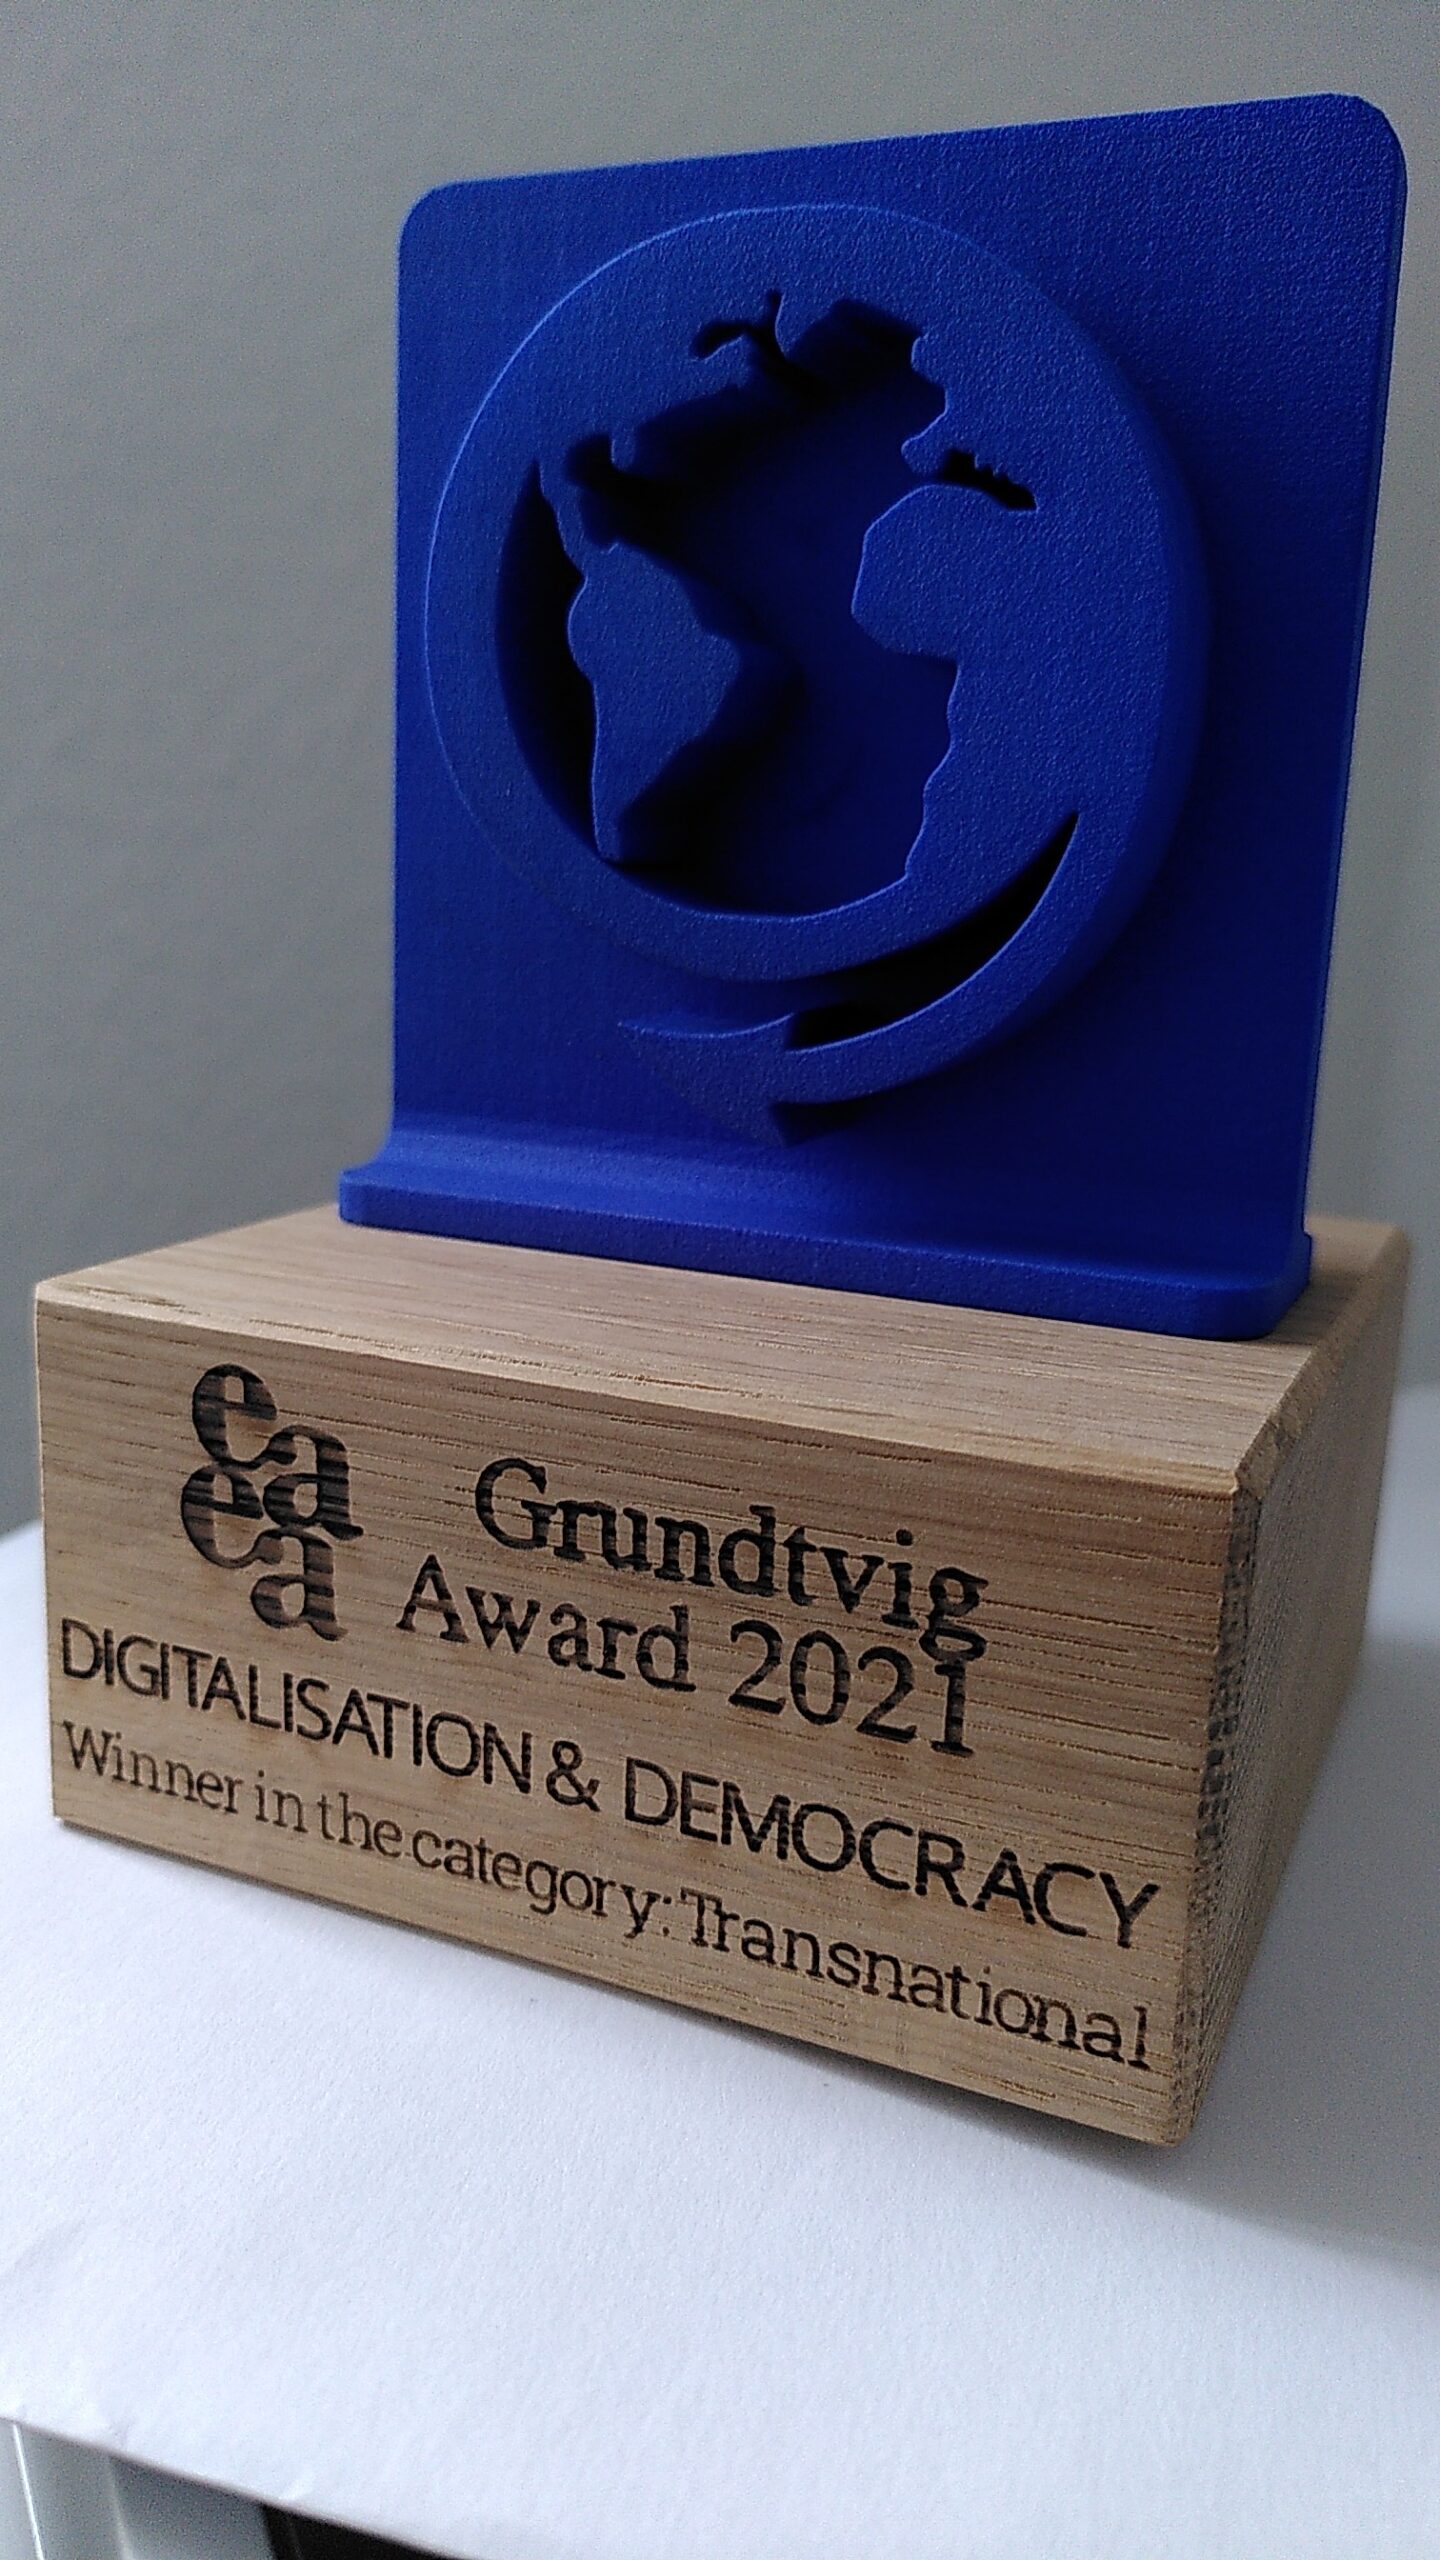 Grundtvig Award 2021 ceremony at November 18, 2021